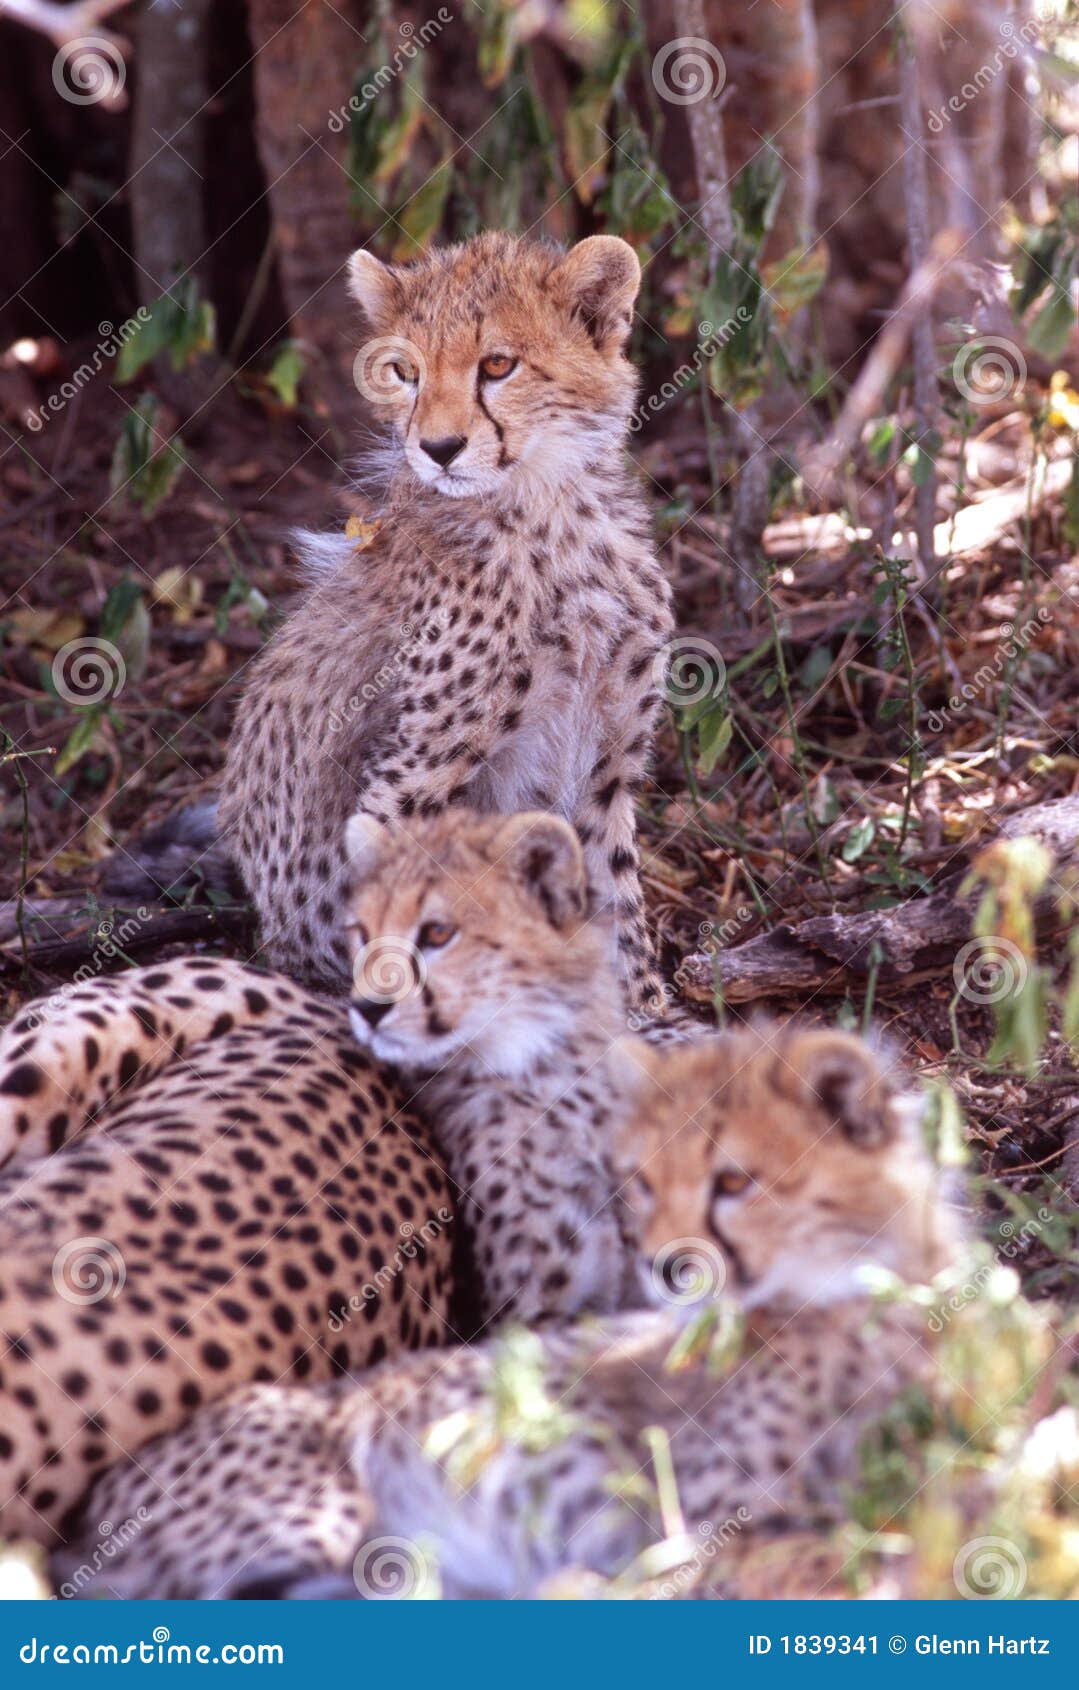 baby cheetahs, serengeti plain, tanzania